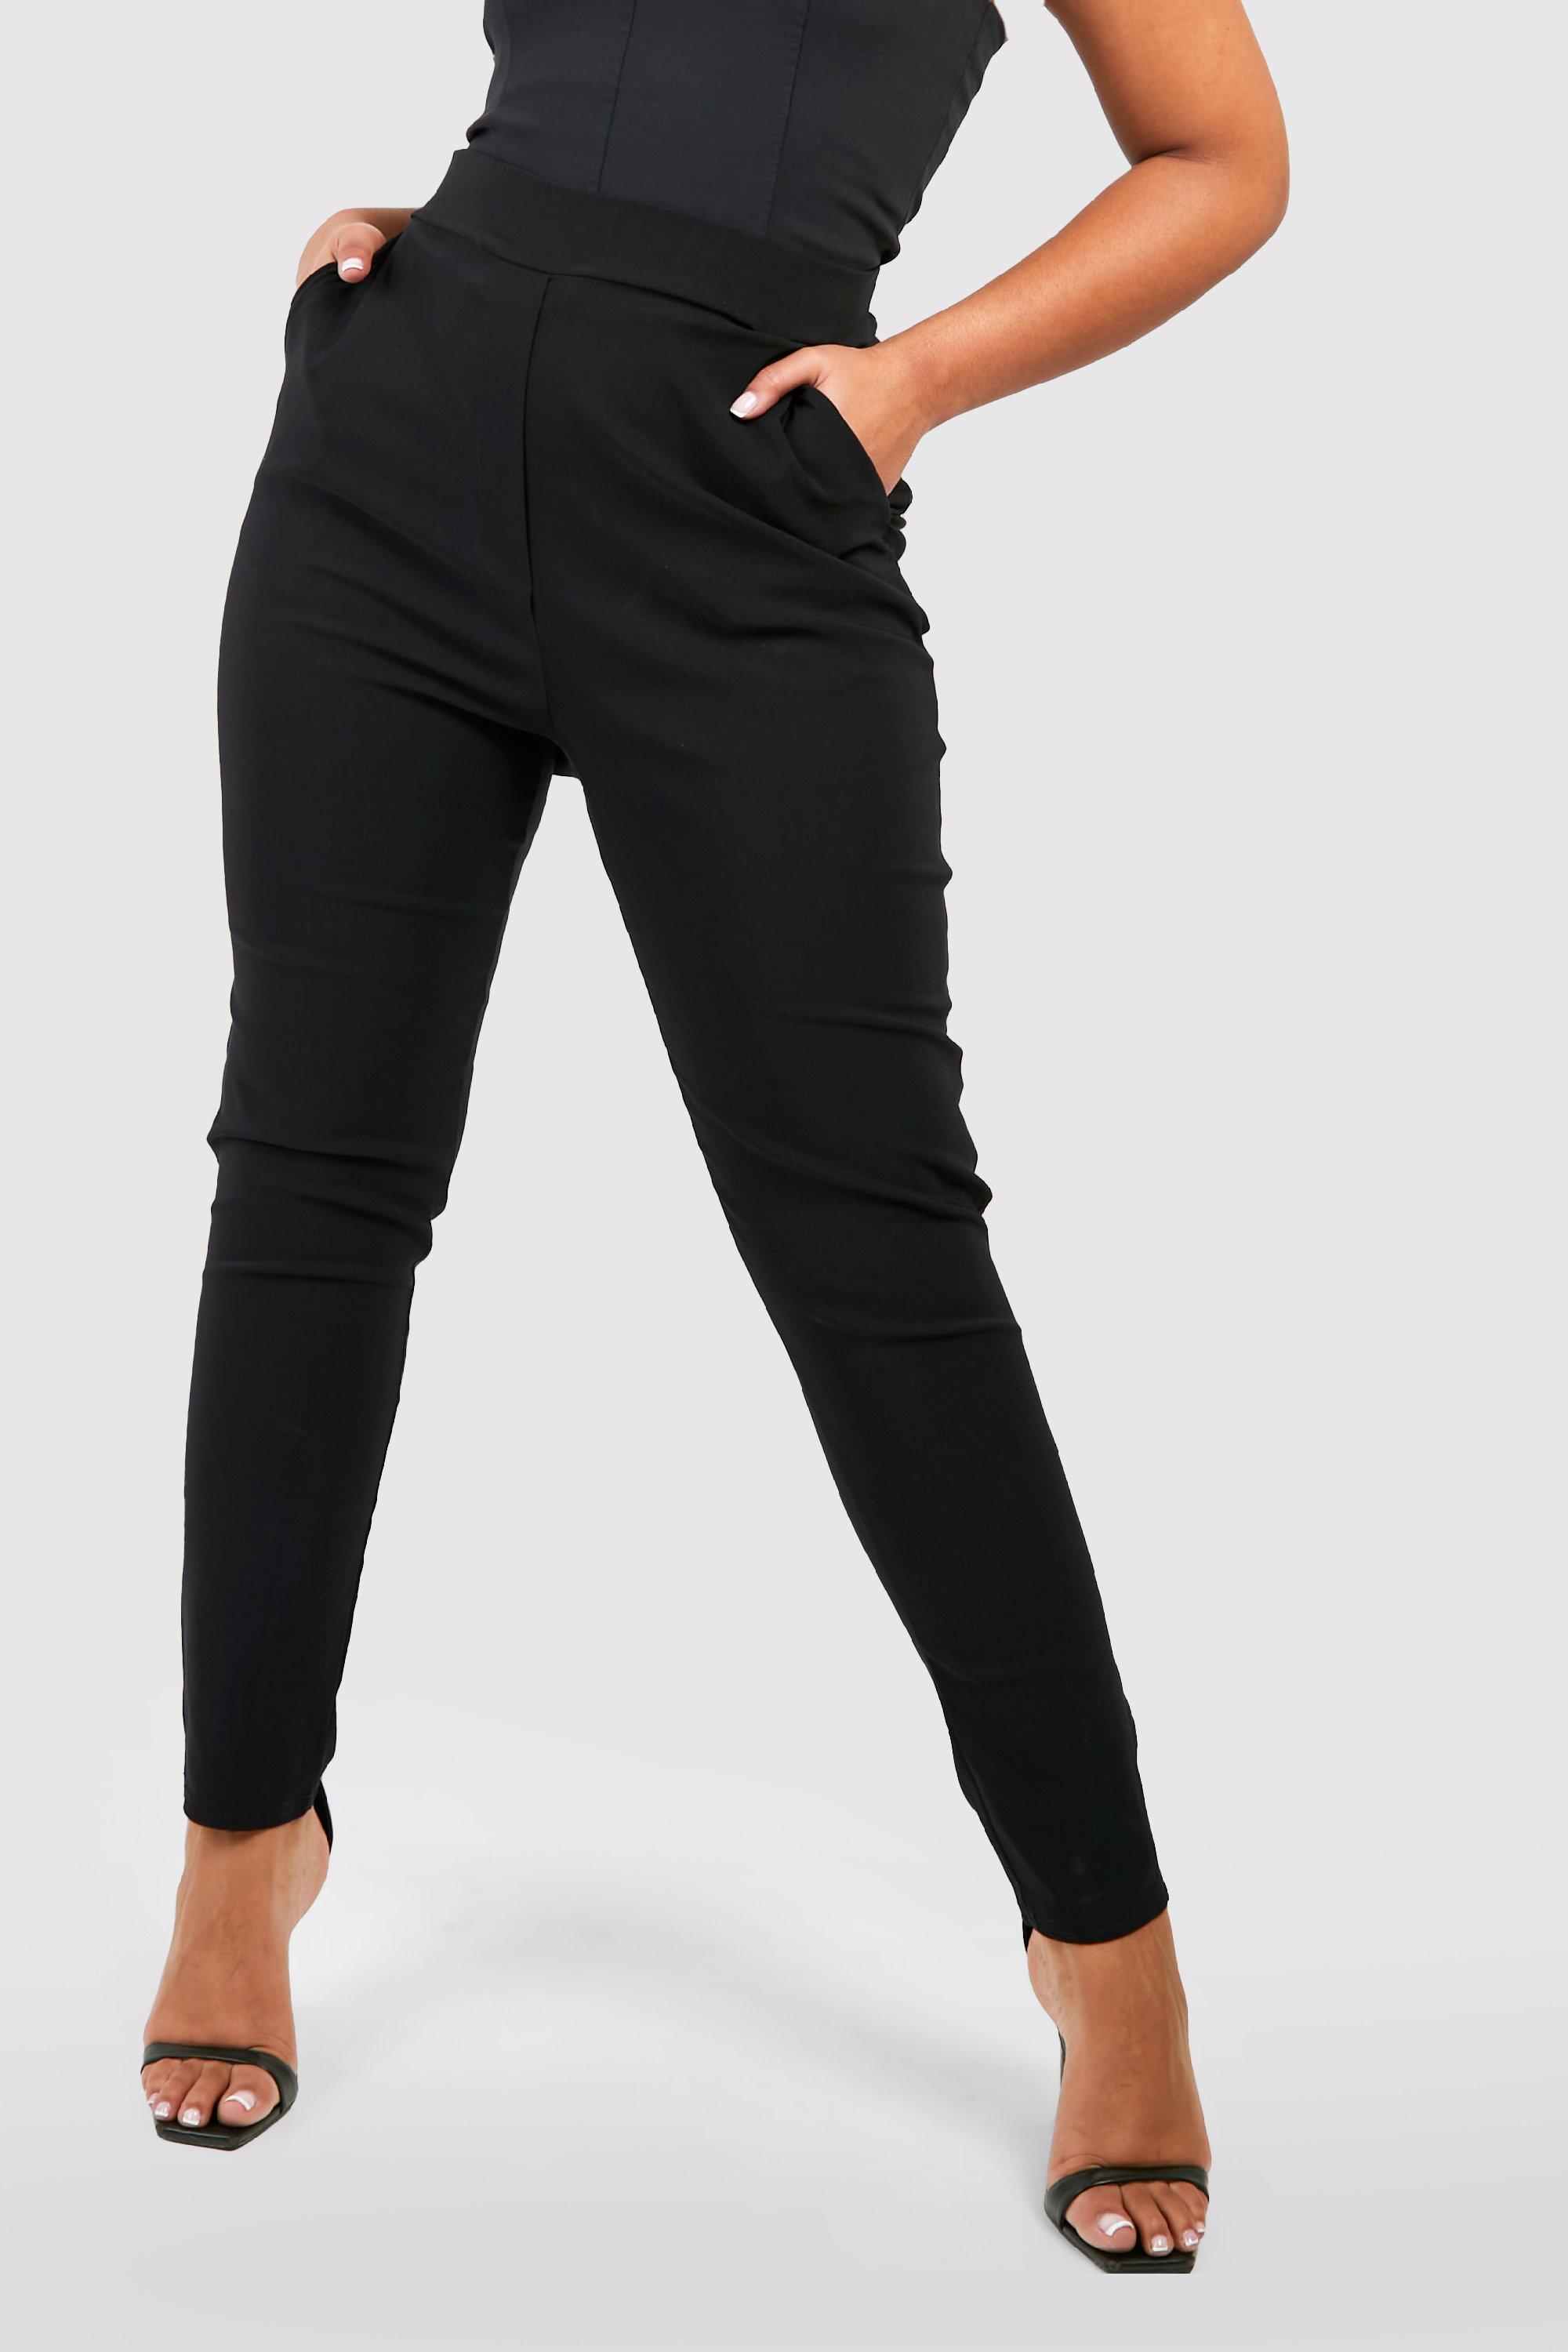 https://media.boohoo.com/i/boohoo/pzz65684_black_xl_3/female-black-plus-super-stretch-fitted-pants